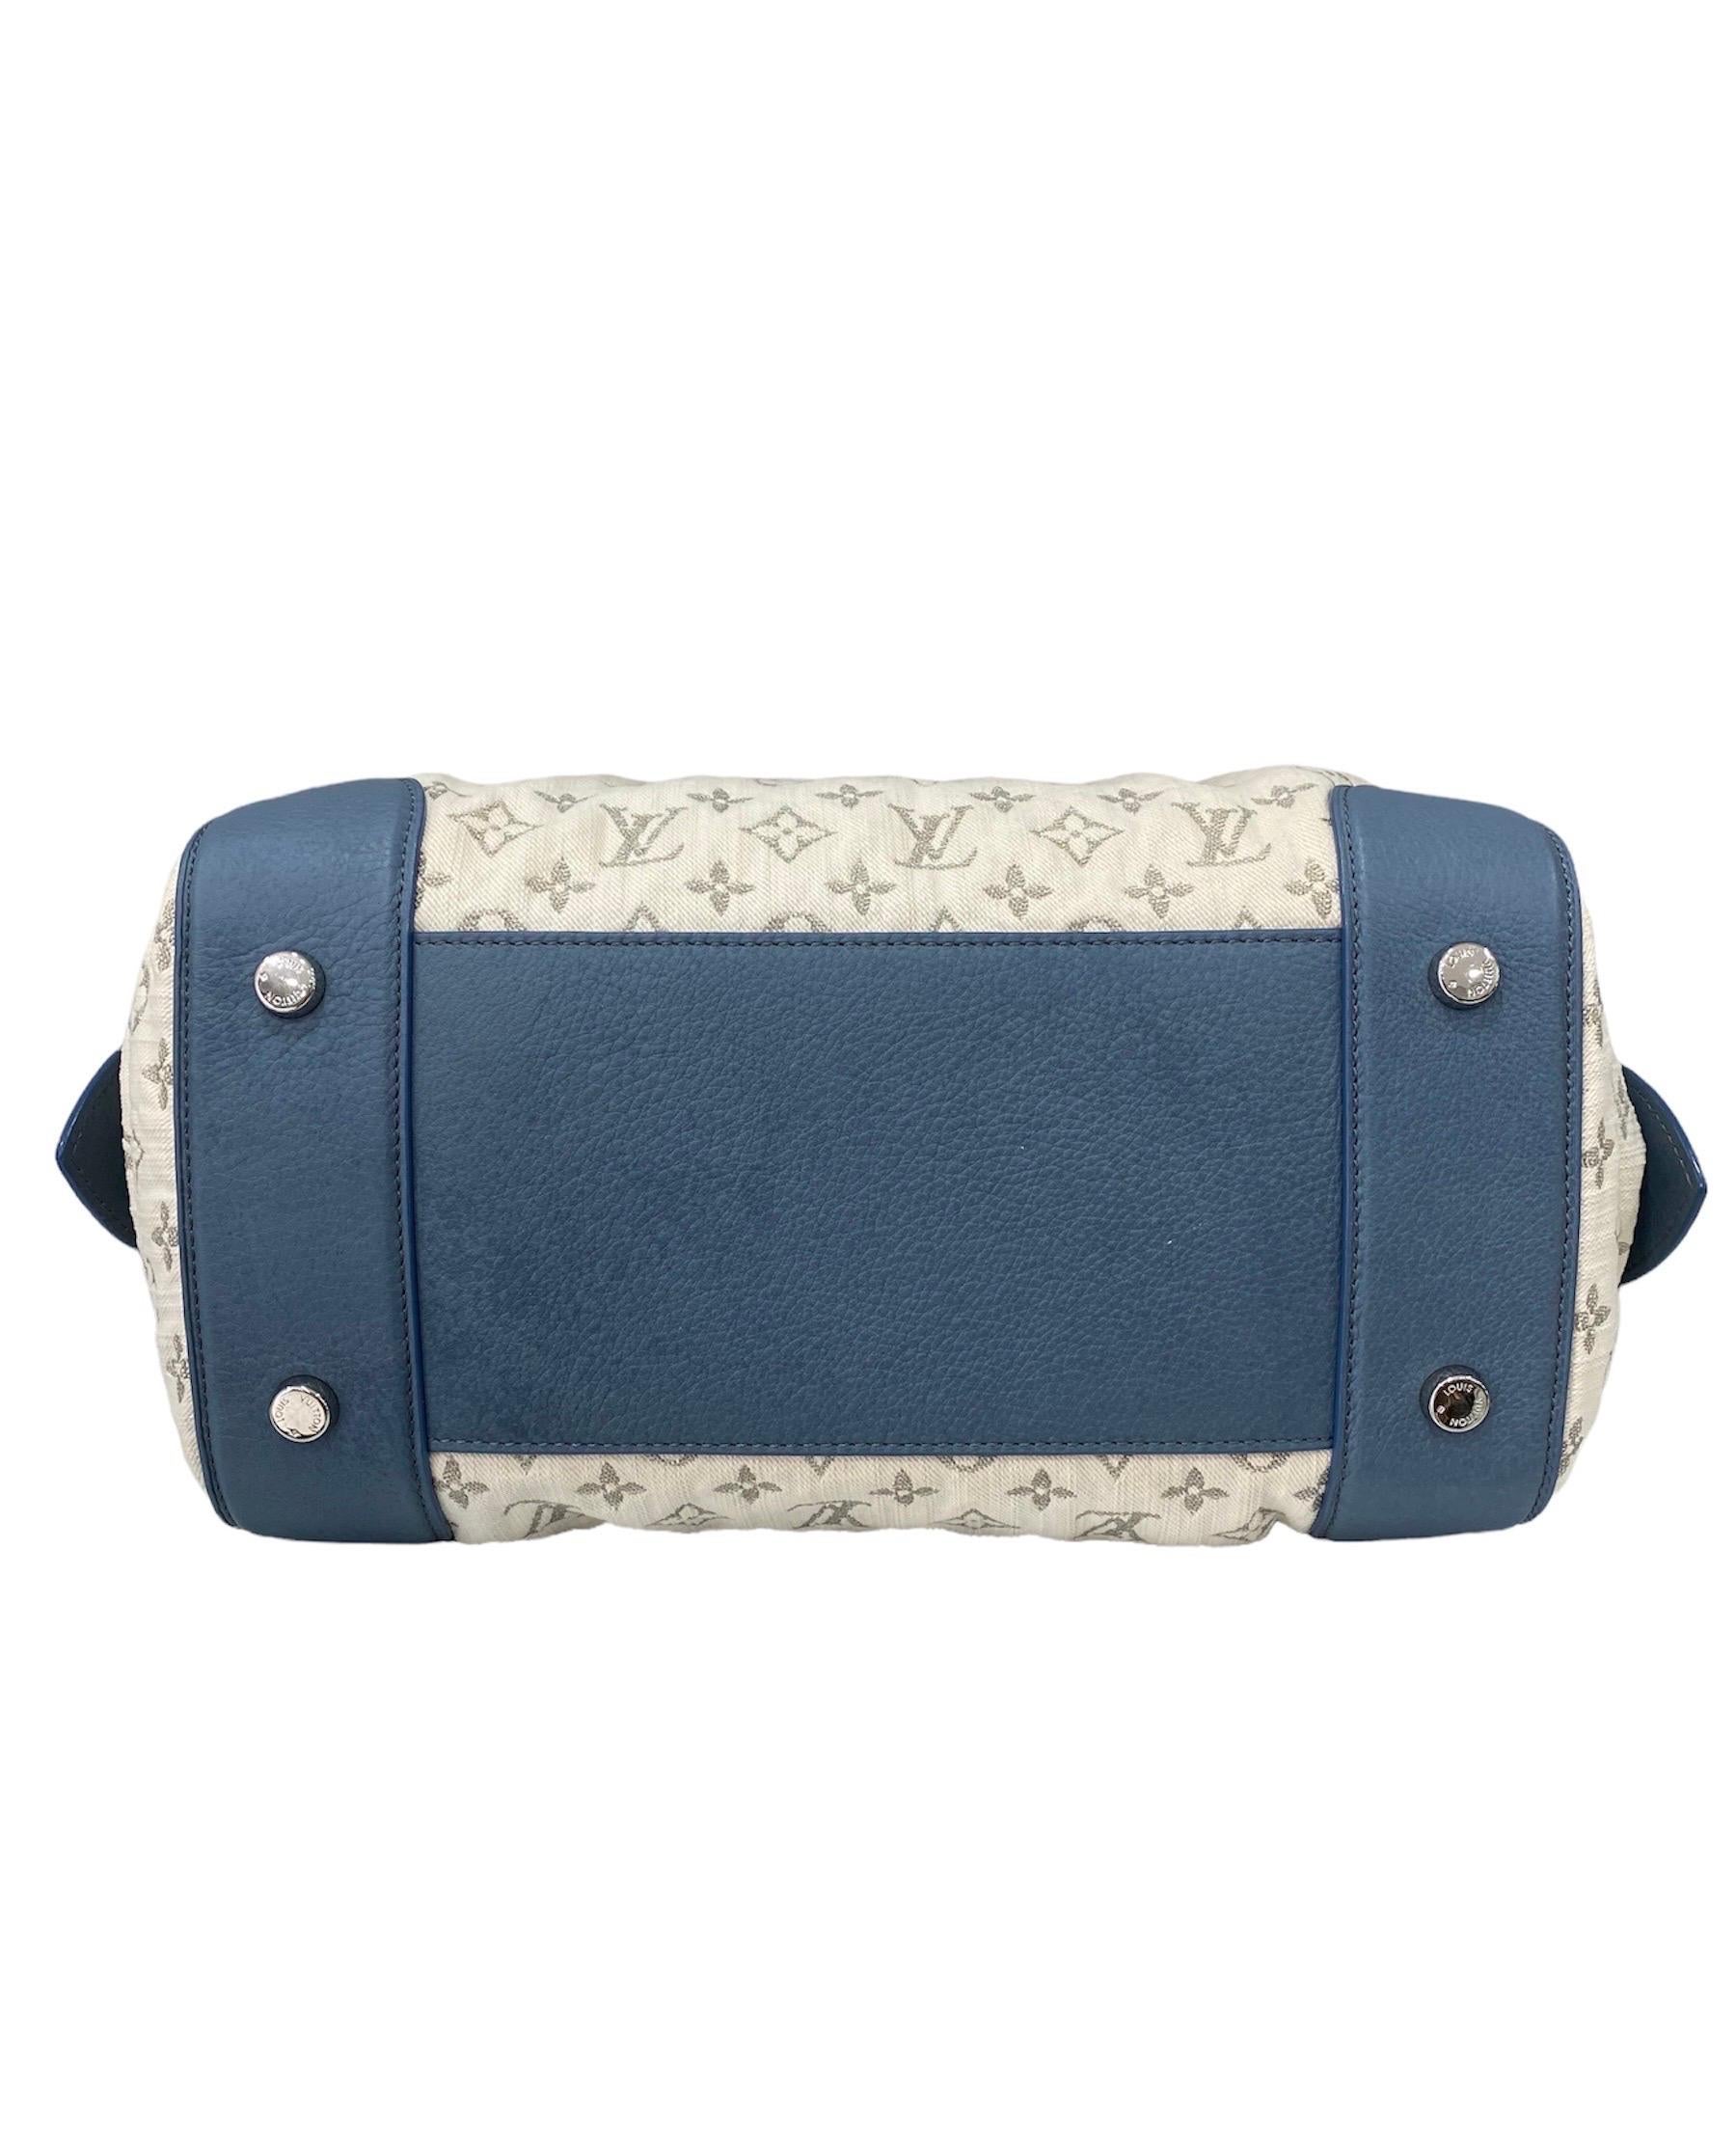 Women's or Men's Louis Vuitton Handbag Blue White 